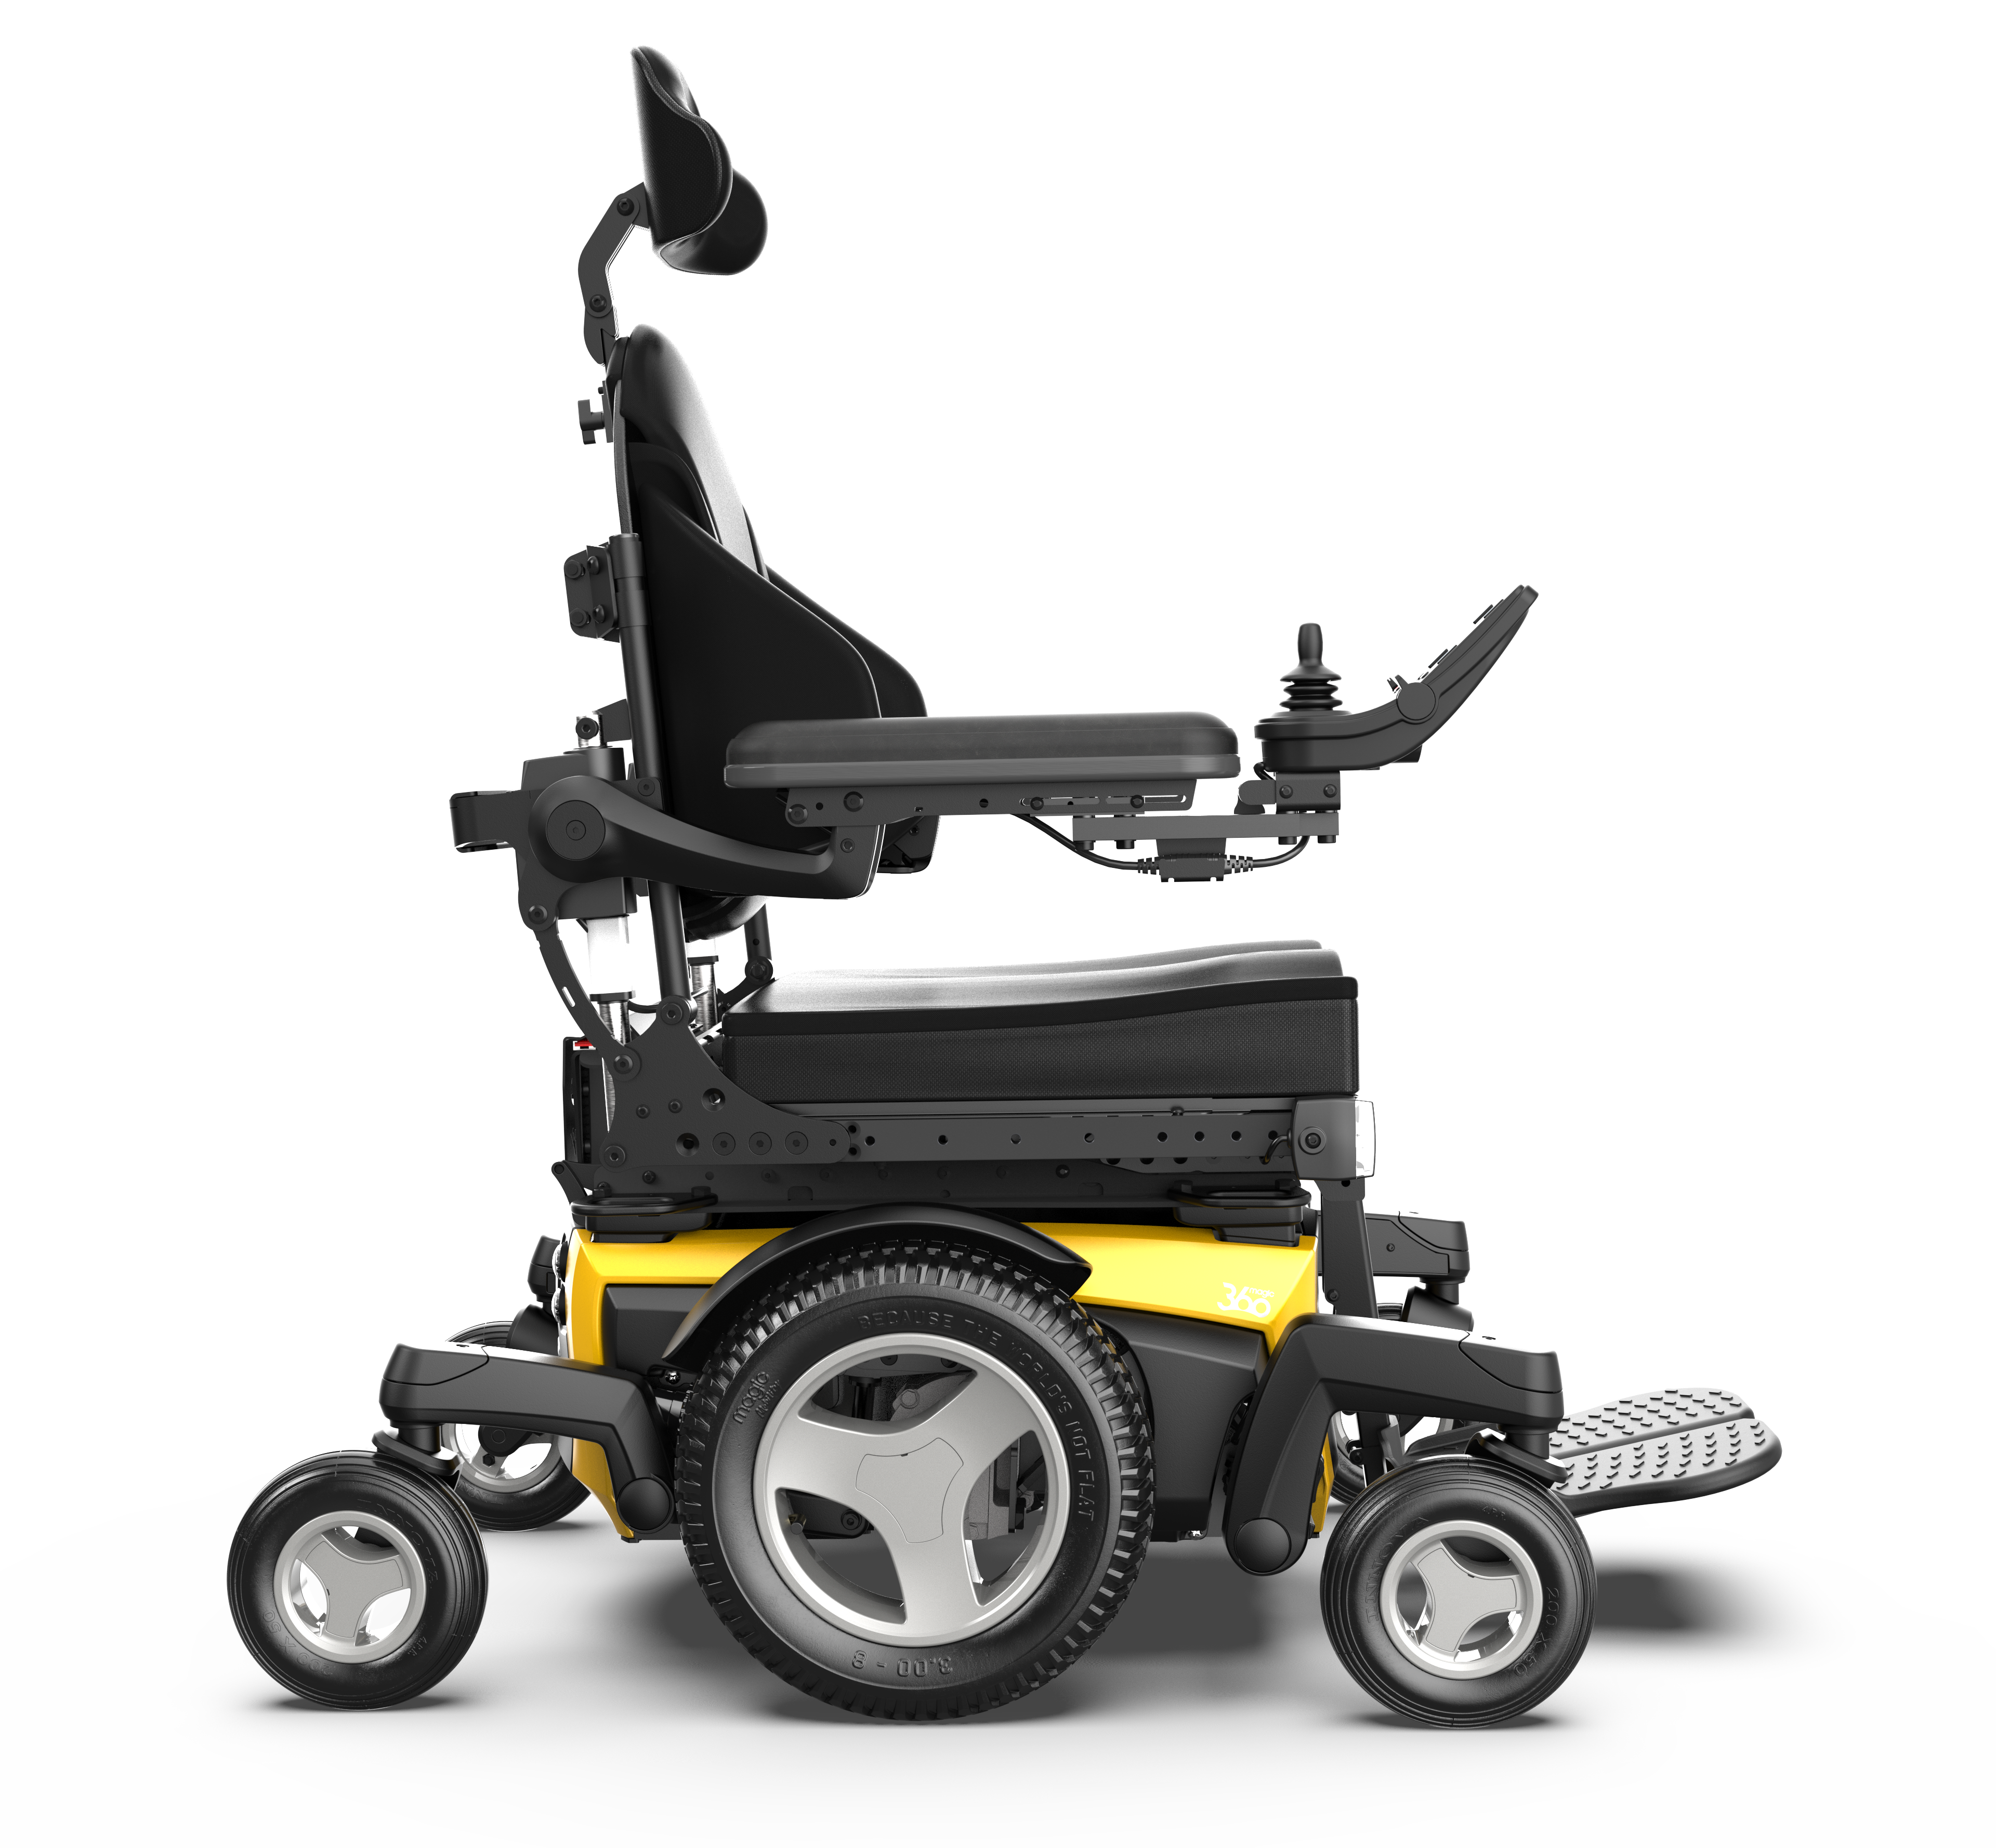 Magic Mobility 360 Mid Wheel Drive All Terrain Wheelchair from Motus Medical